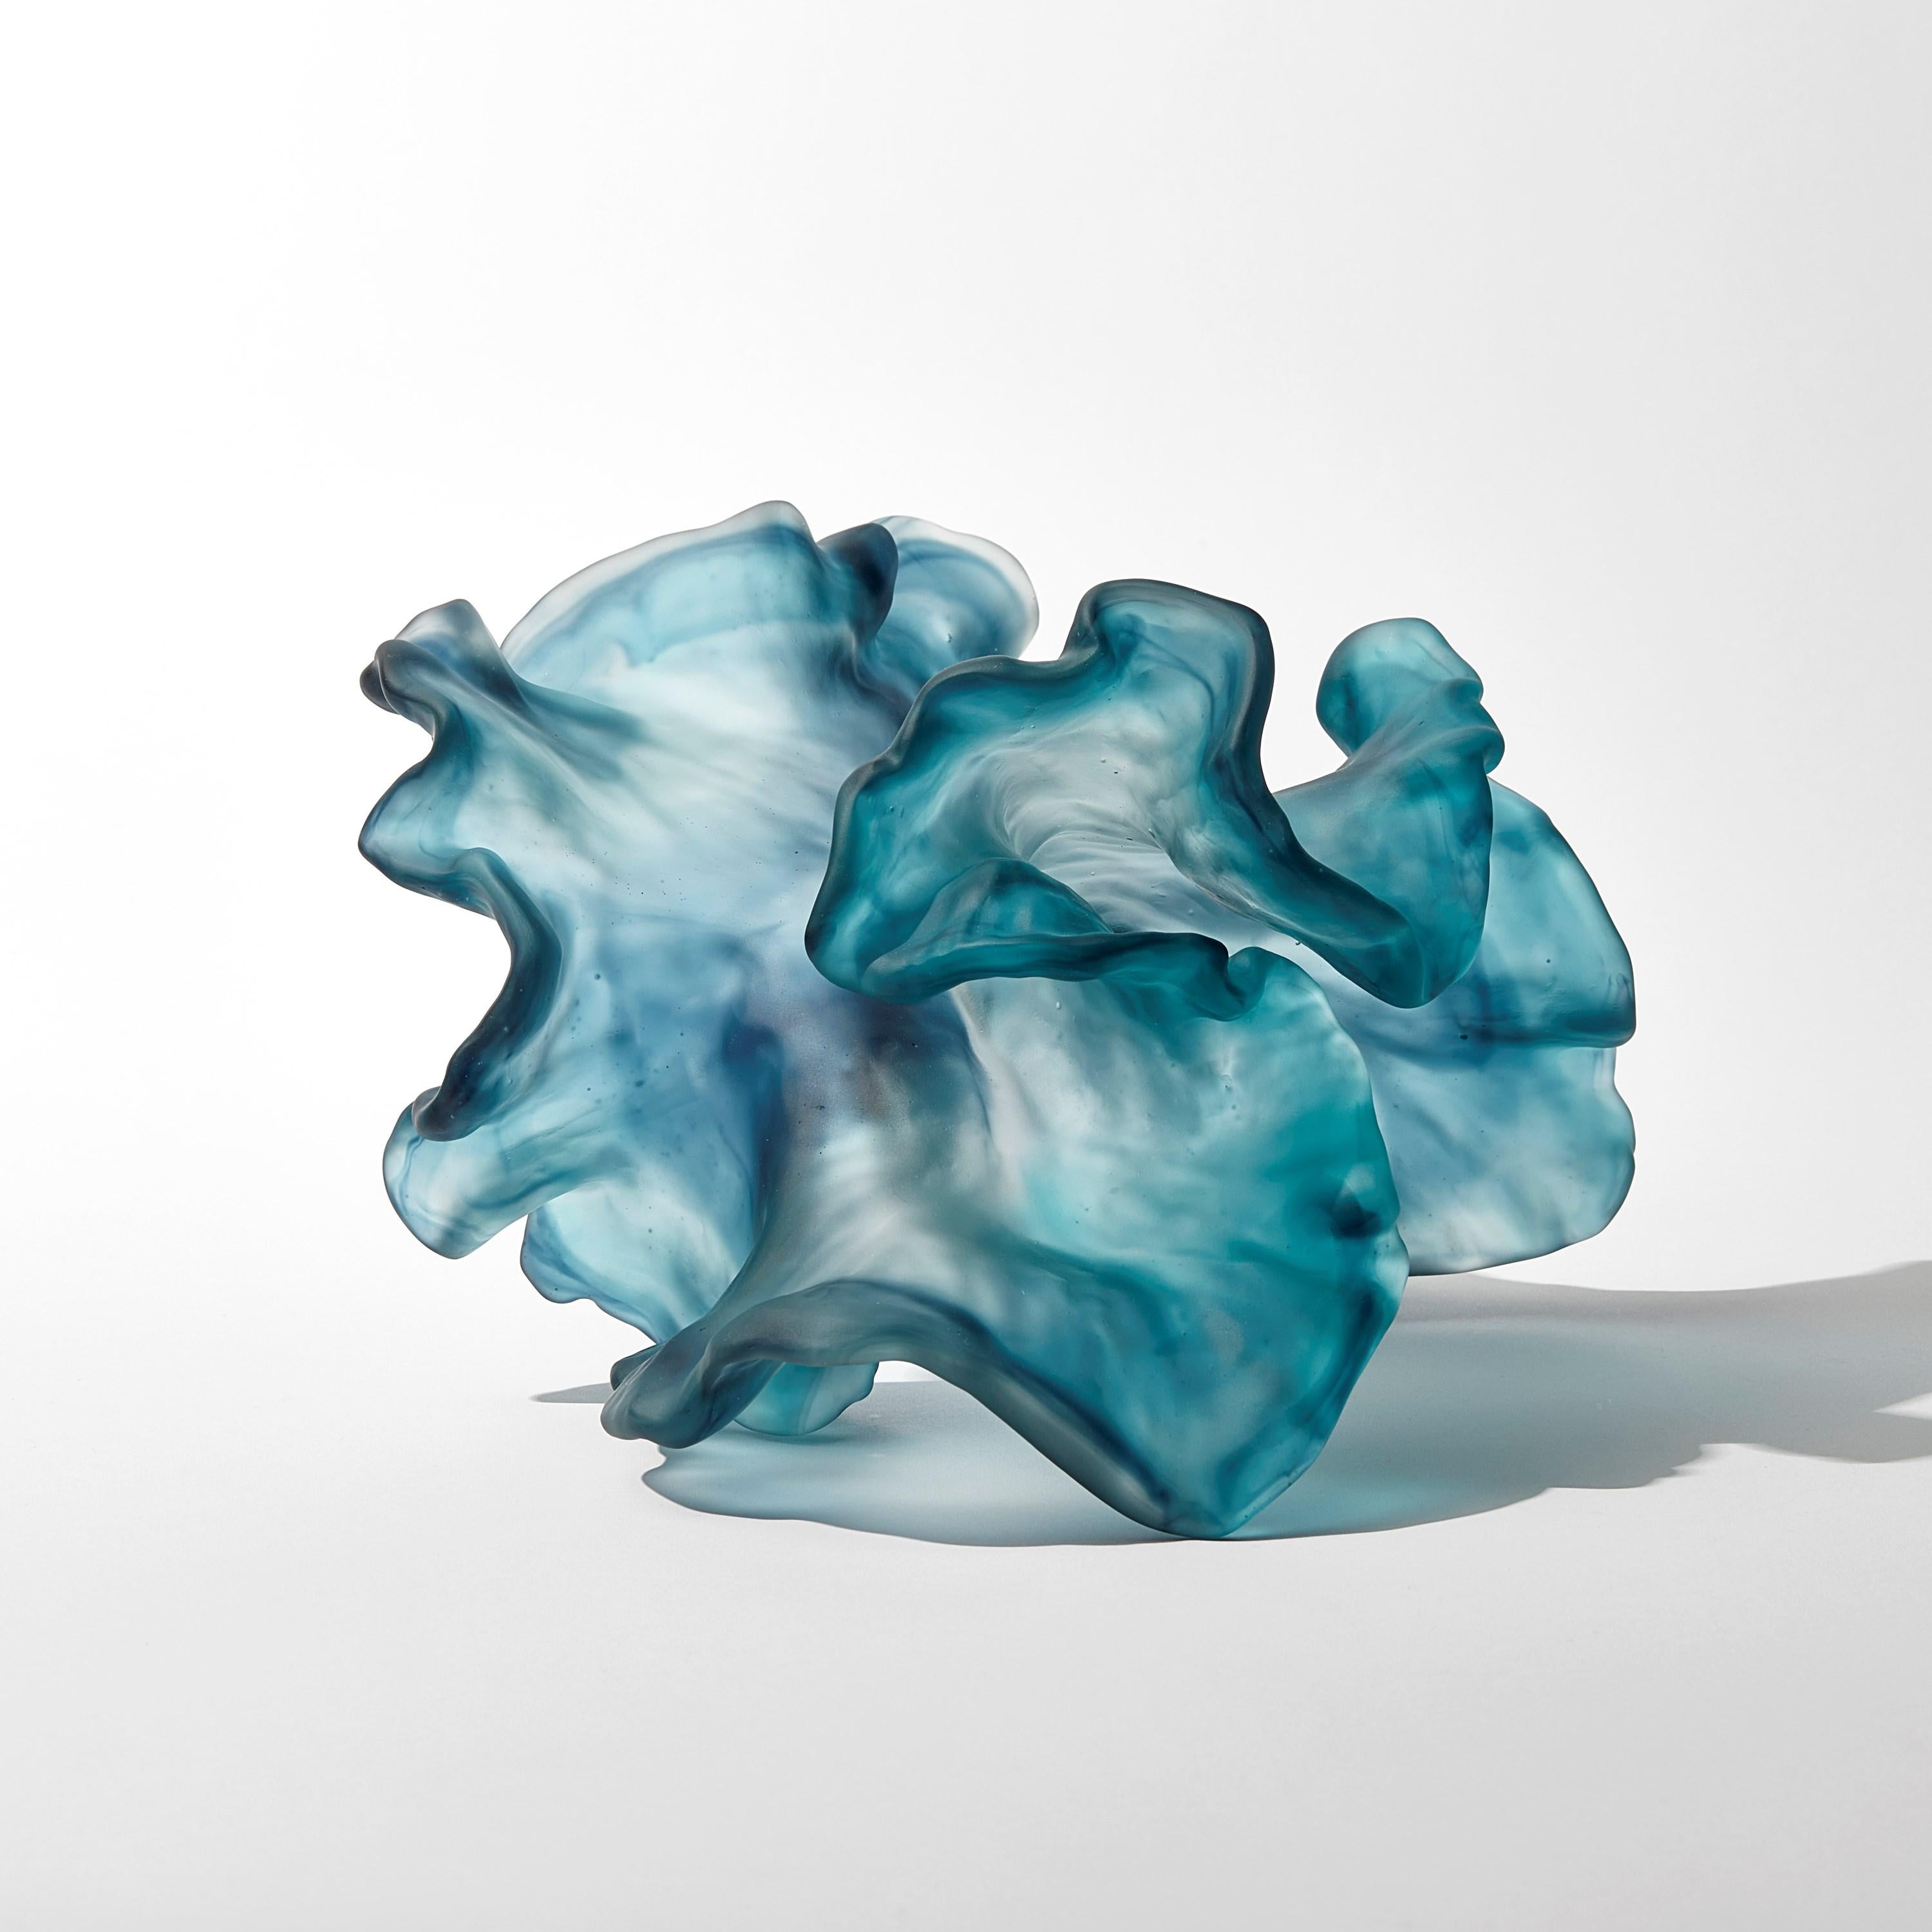 Cast Floating Twist, teal blue cast glass ethereal organic artwork by Monette Larsen For Sale